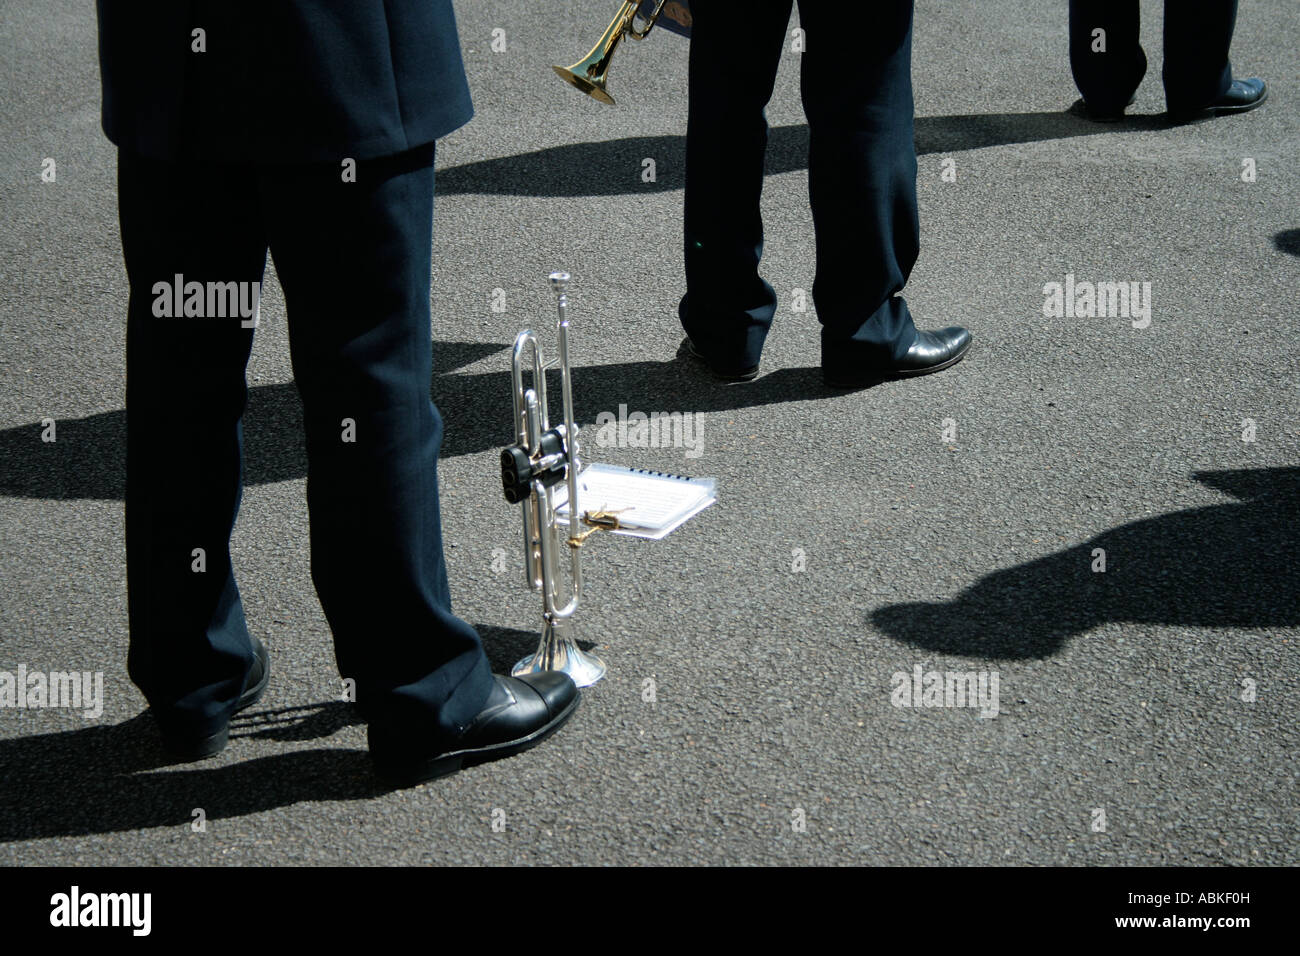 Garda Siochana (Irish police) musical band preparing to preform Stock Photo